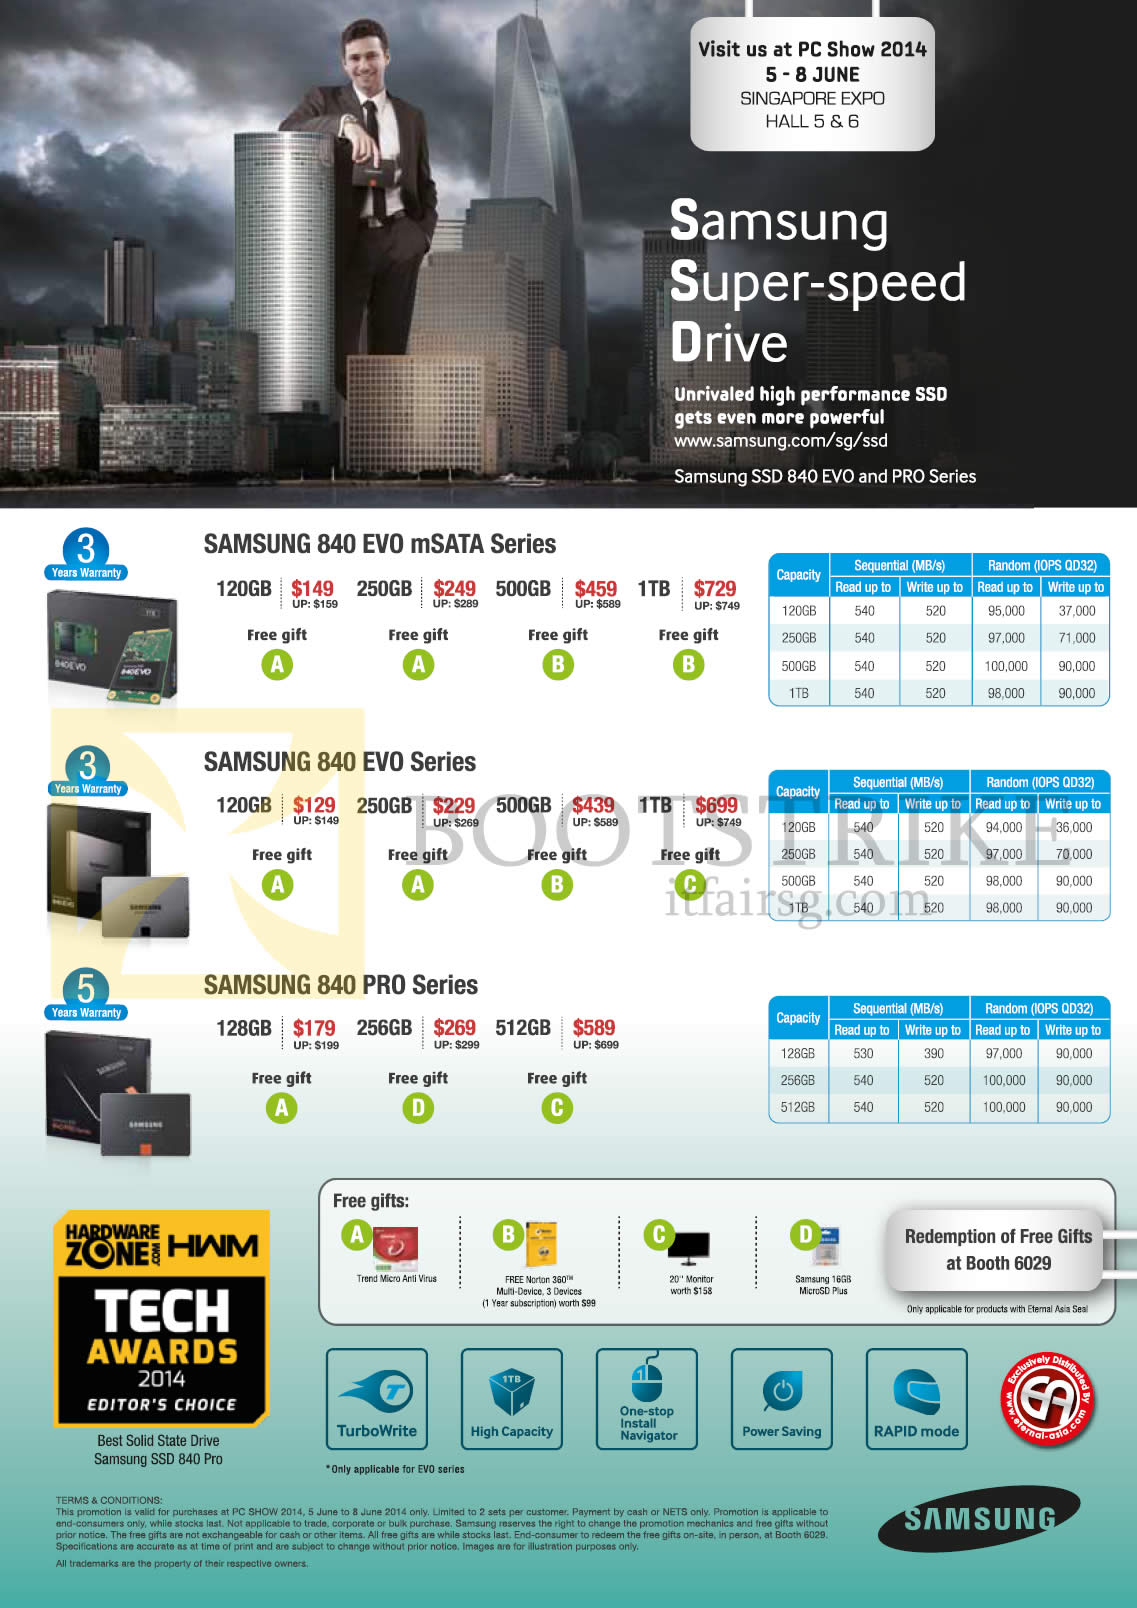 PC SHOW 2014 price list image brochure of Samsung SSD Storage Drives 840 EVO MSATA, 840 EVO, 840 PRO